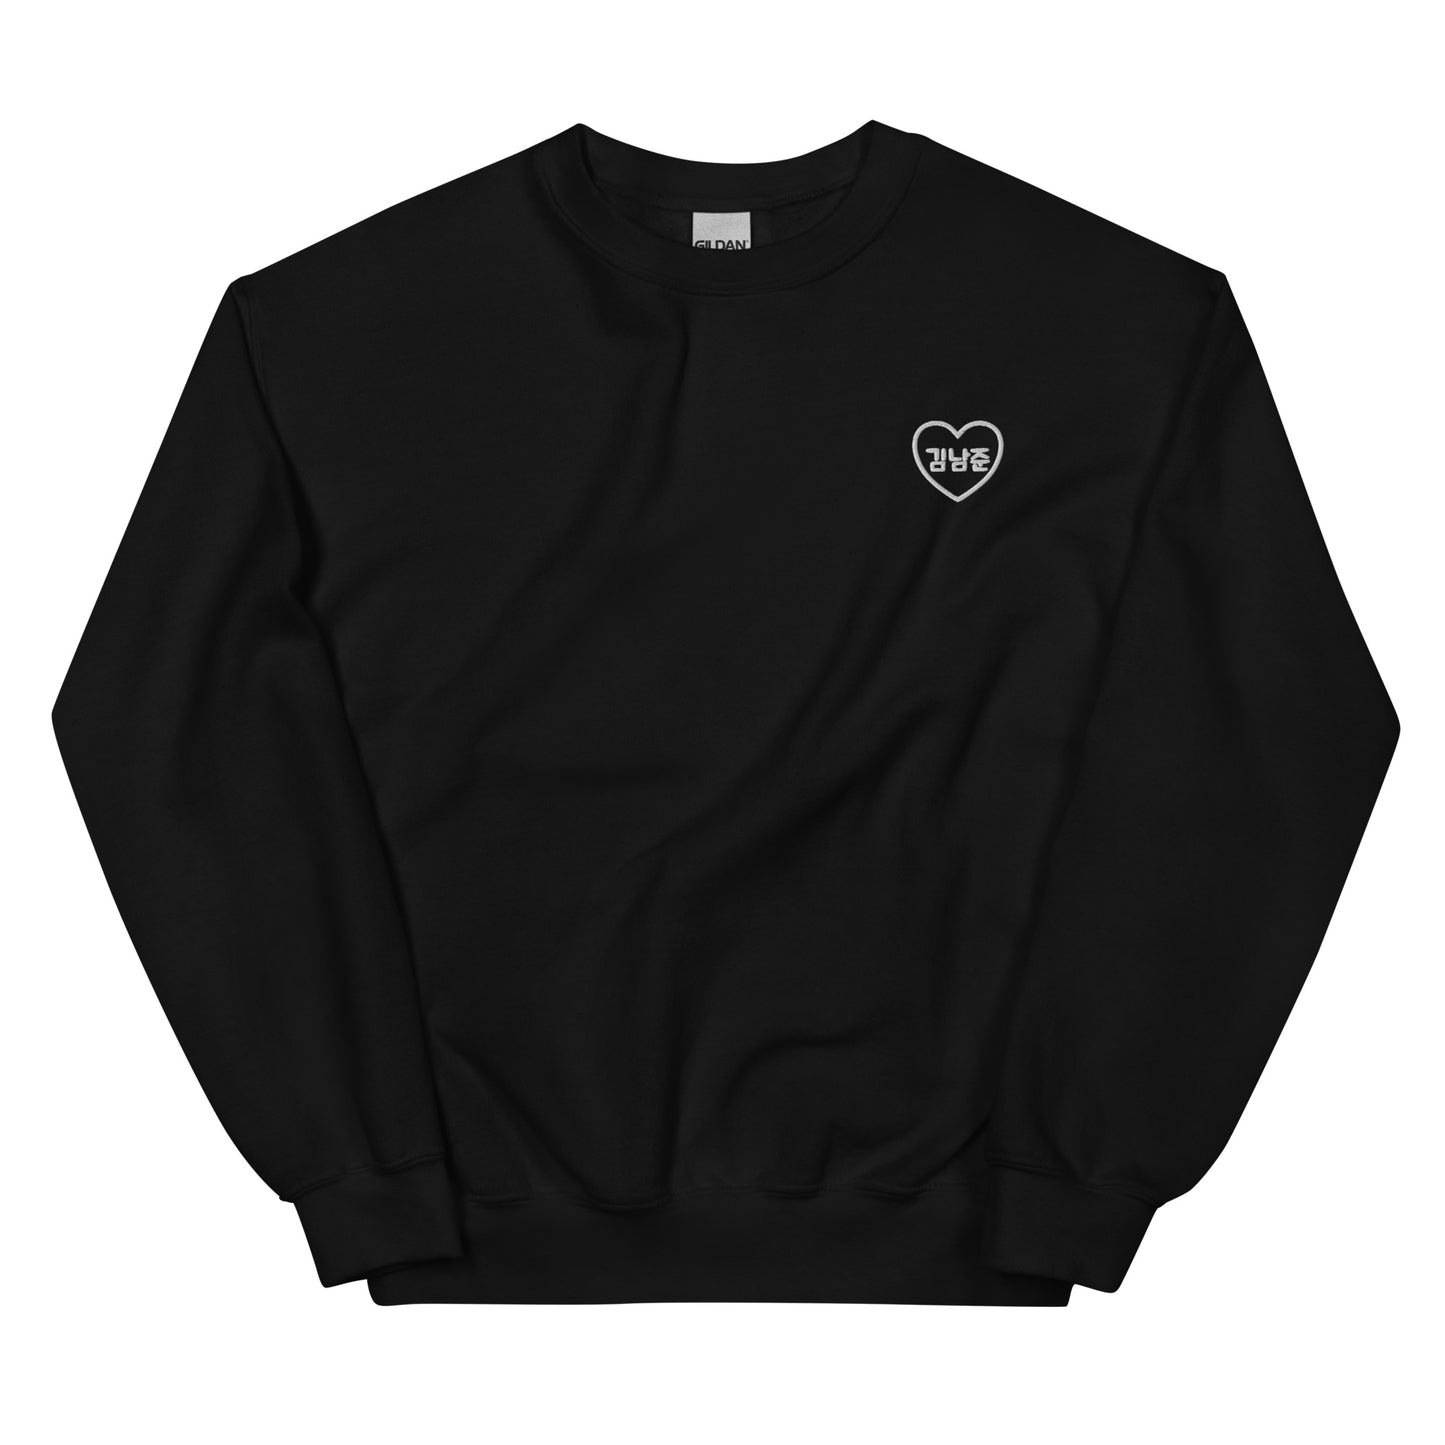 BTS RM, Kim Nam-joon Korean Name Merch Embroidery Unisex Sweatshirt